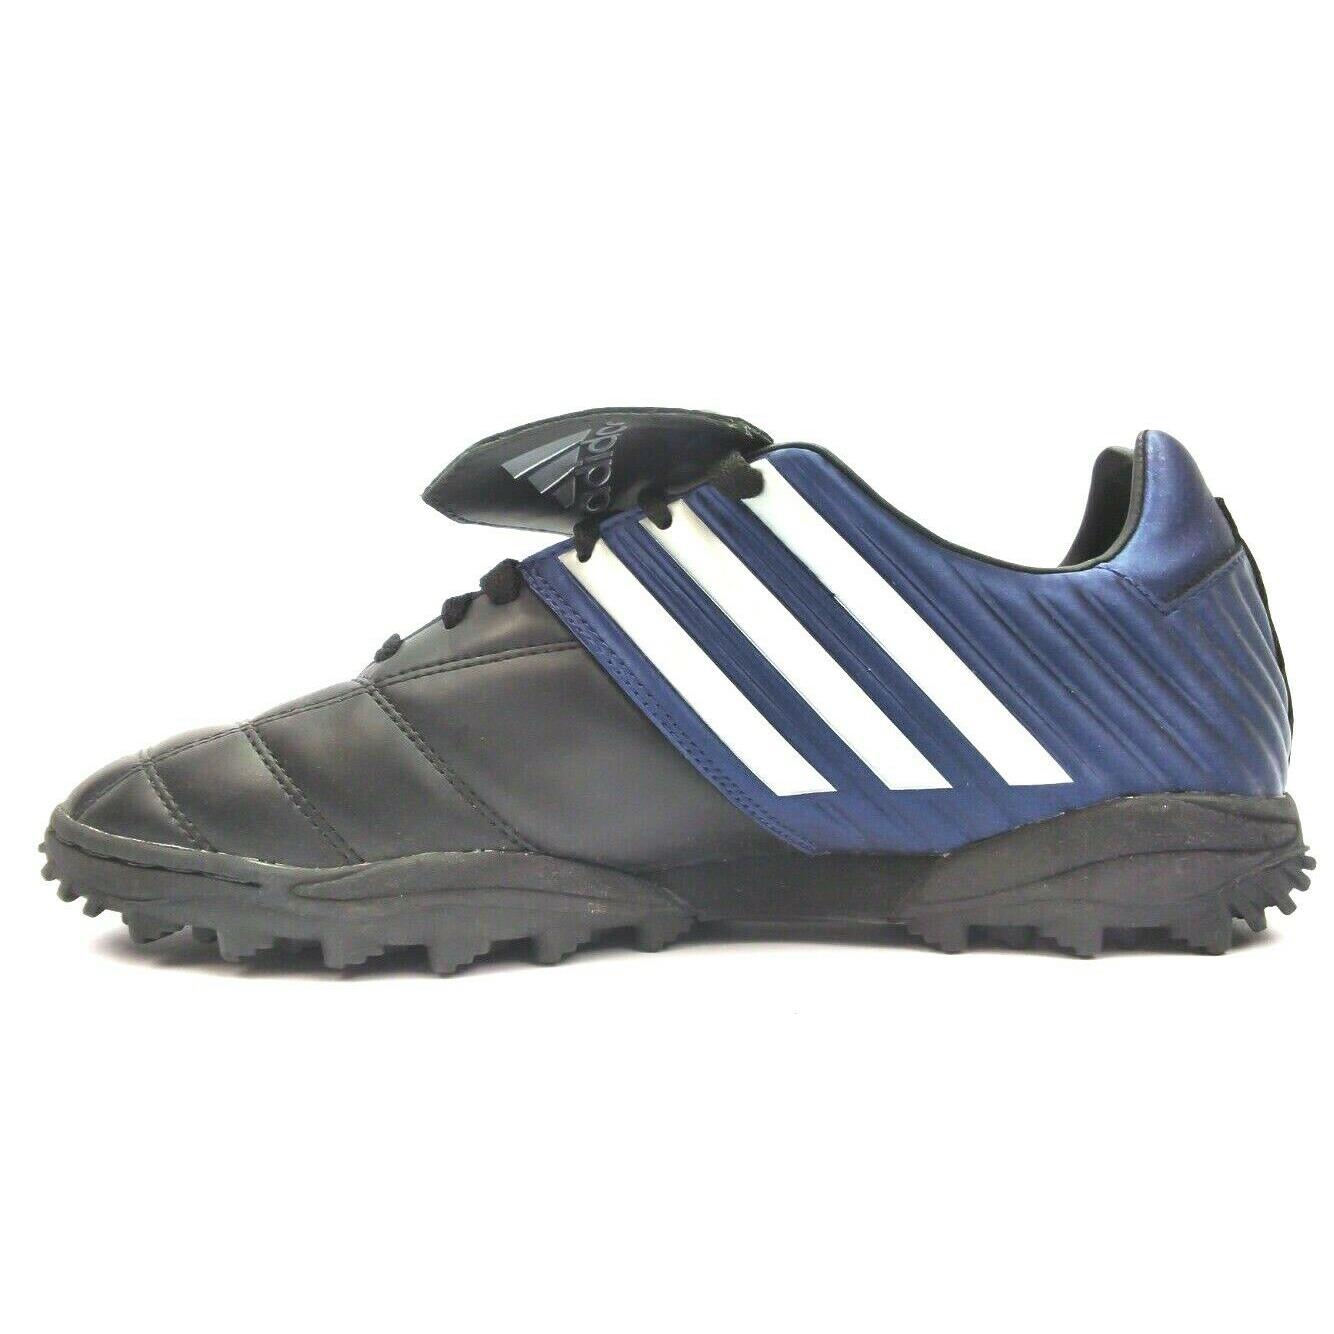 Adidas shoes adizero boston - Black Blue Running White 0